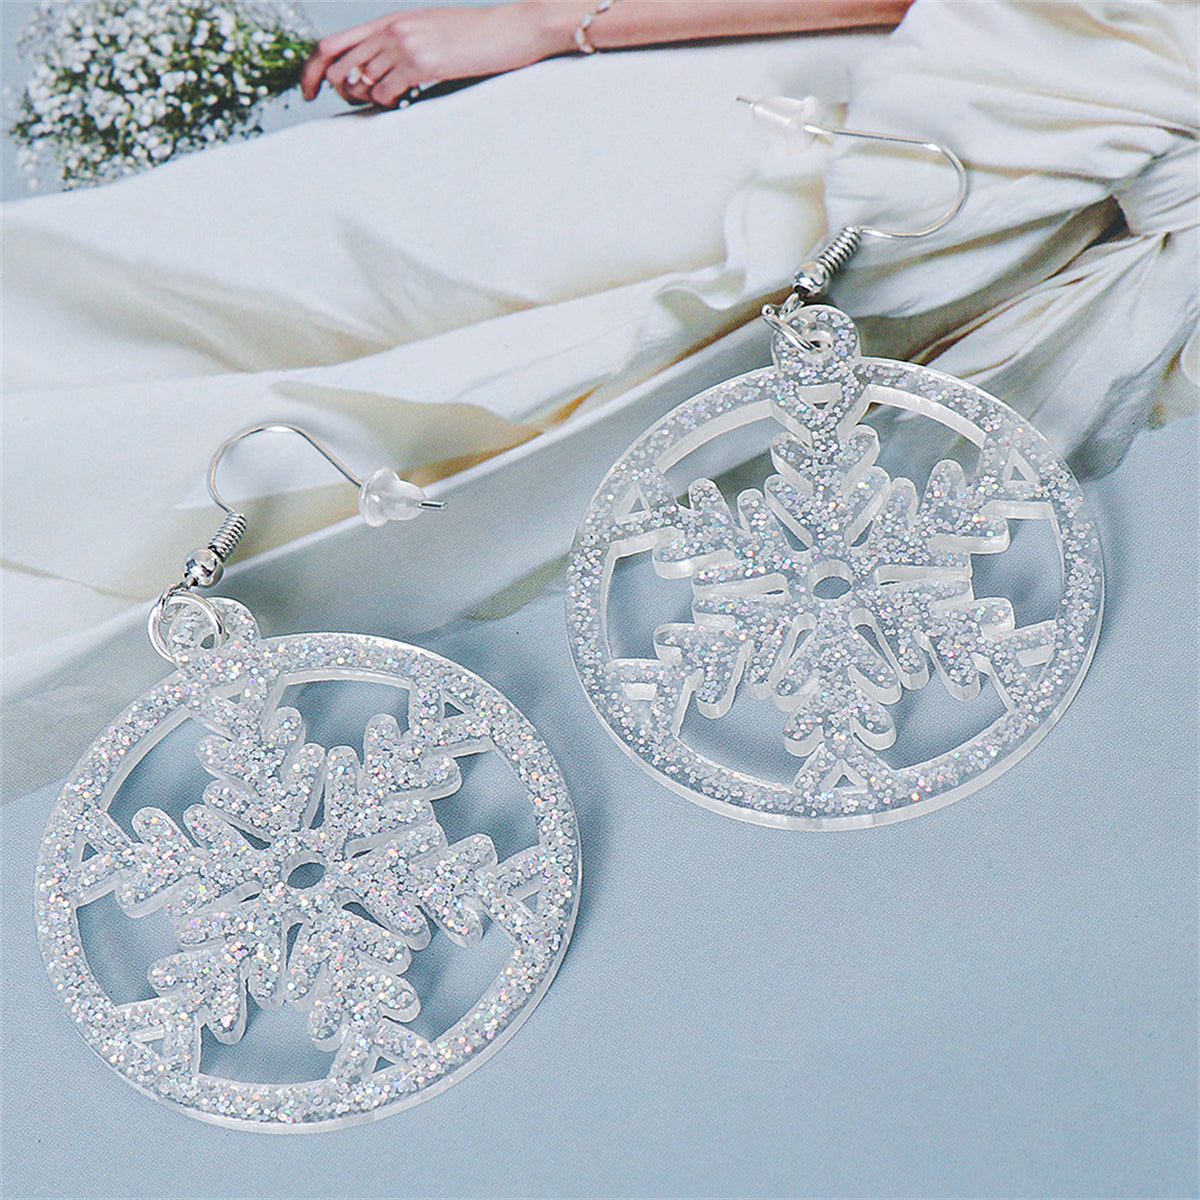 Acrylic & Silver-Plated Glitter Snowflake Circle Drop Earrings